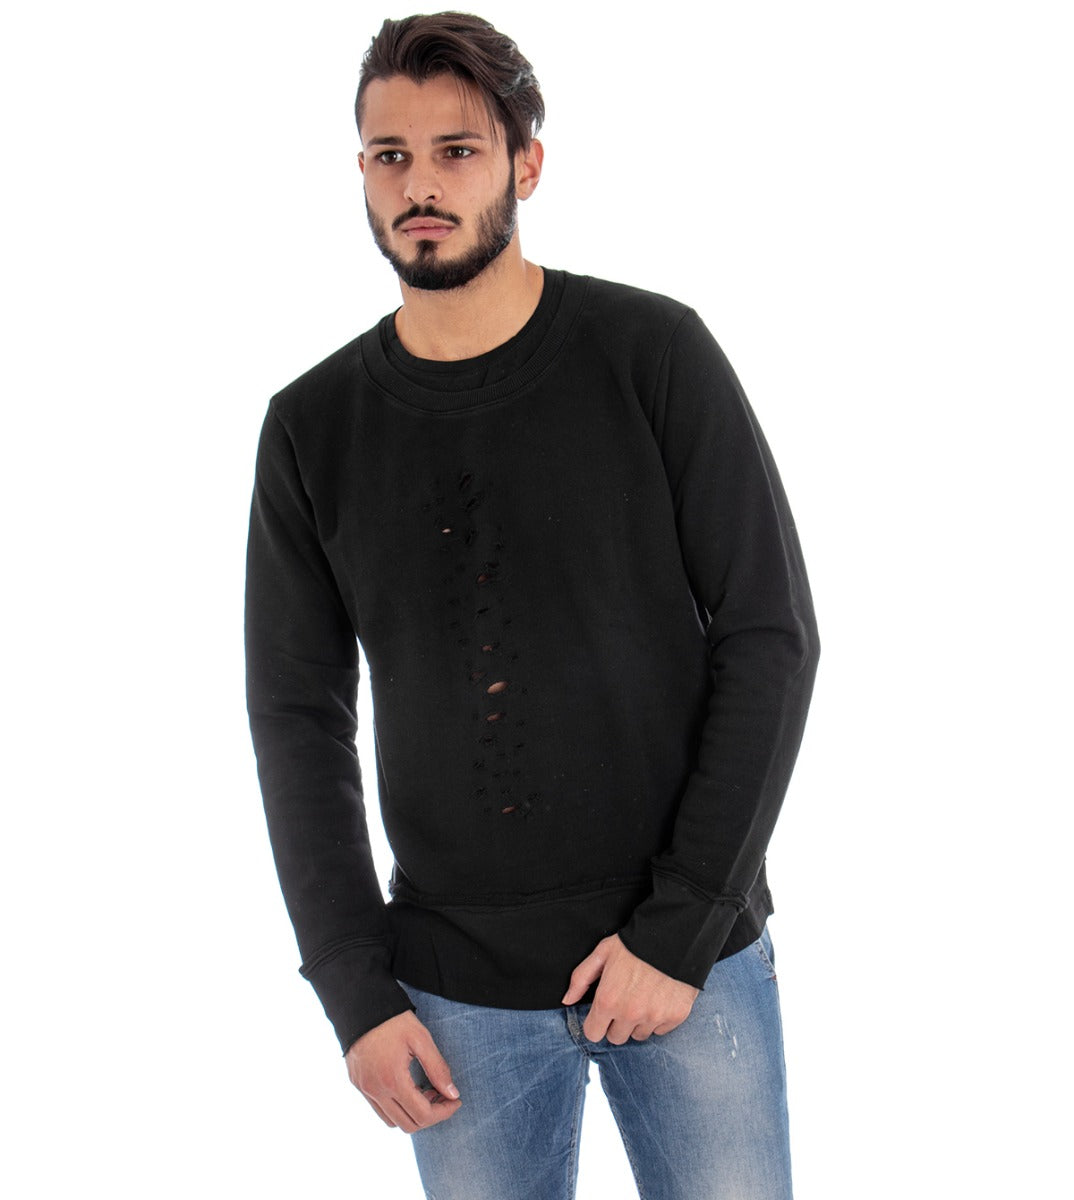 Men's Crewneck Sweatshirt with Breaks Solid Color Black Regular Fit GIOSAL-F2161A